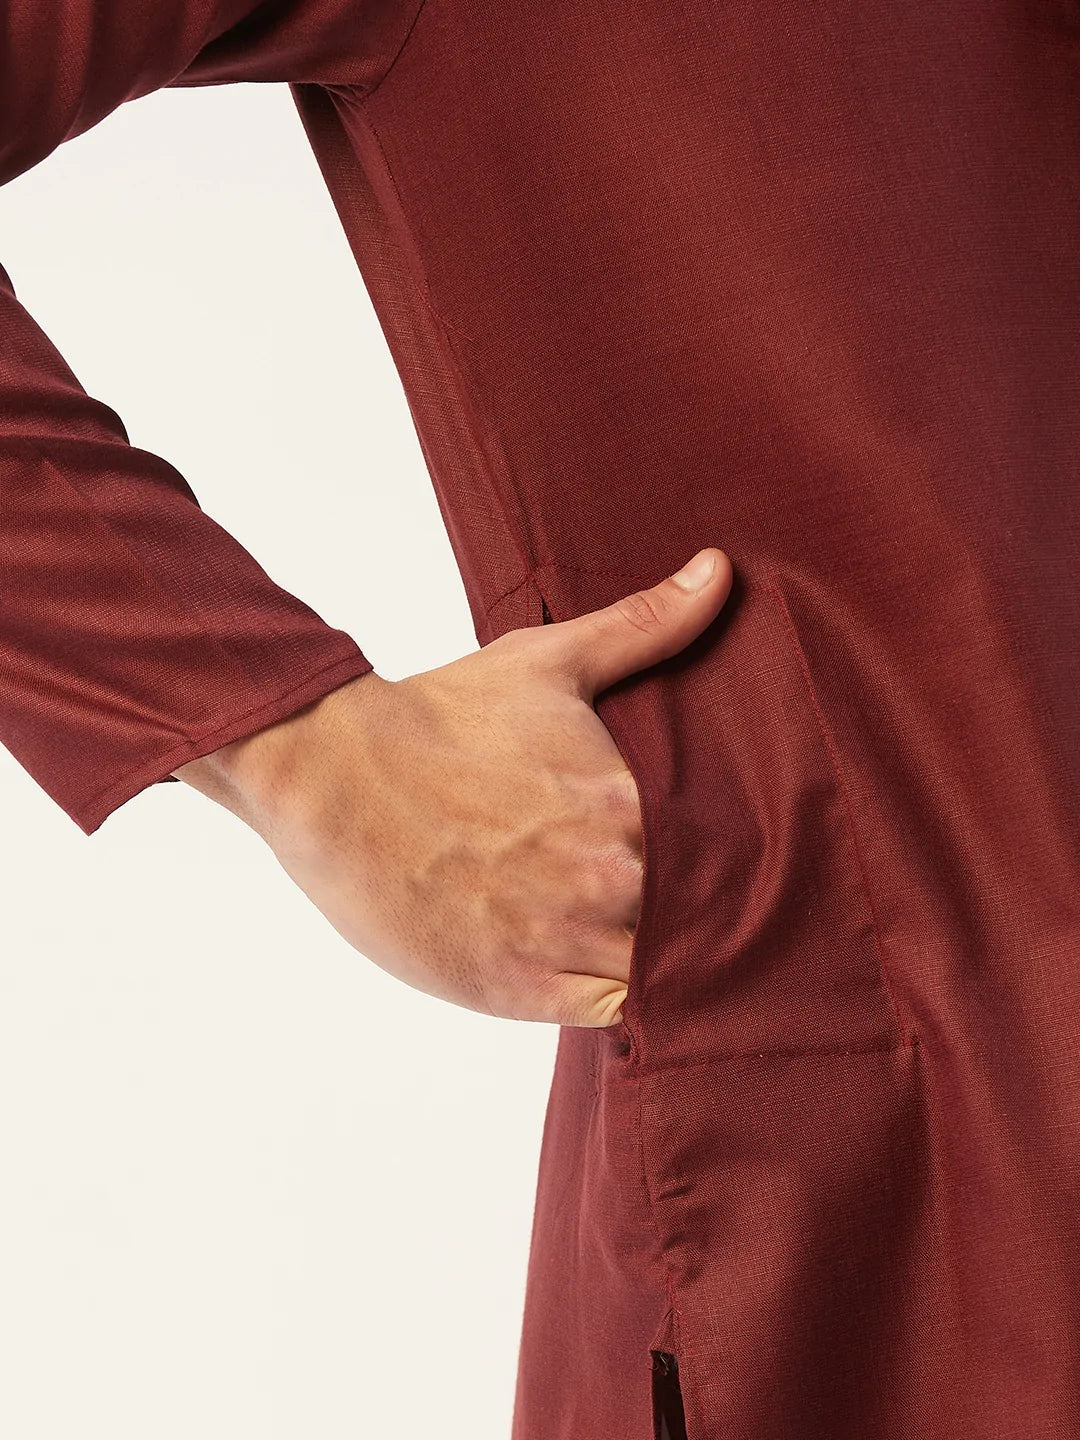 Jompers Men's Maroon Cotton Solid Kurta Pyjama ( JOKP 611 Maroon )